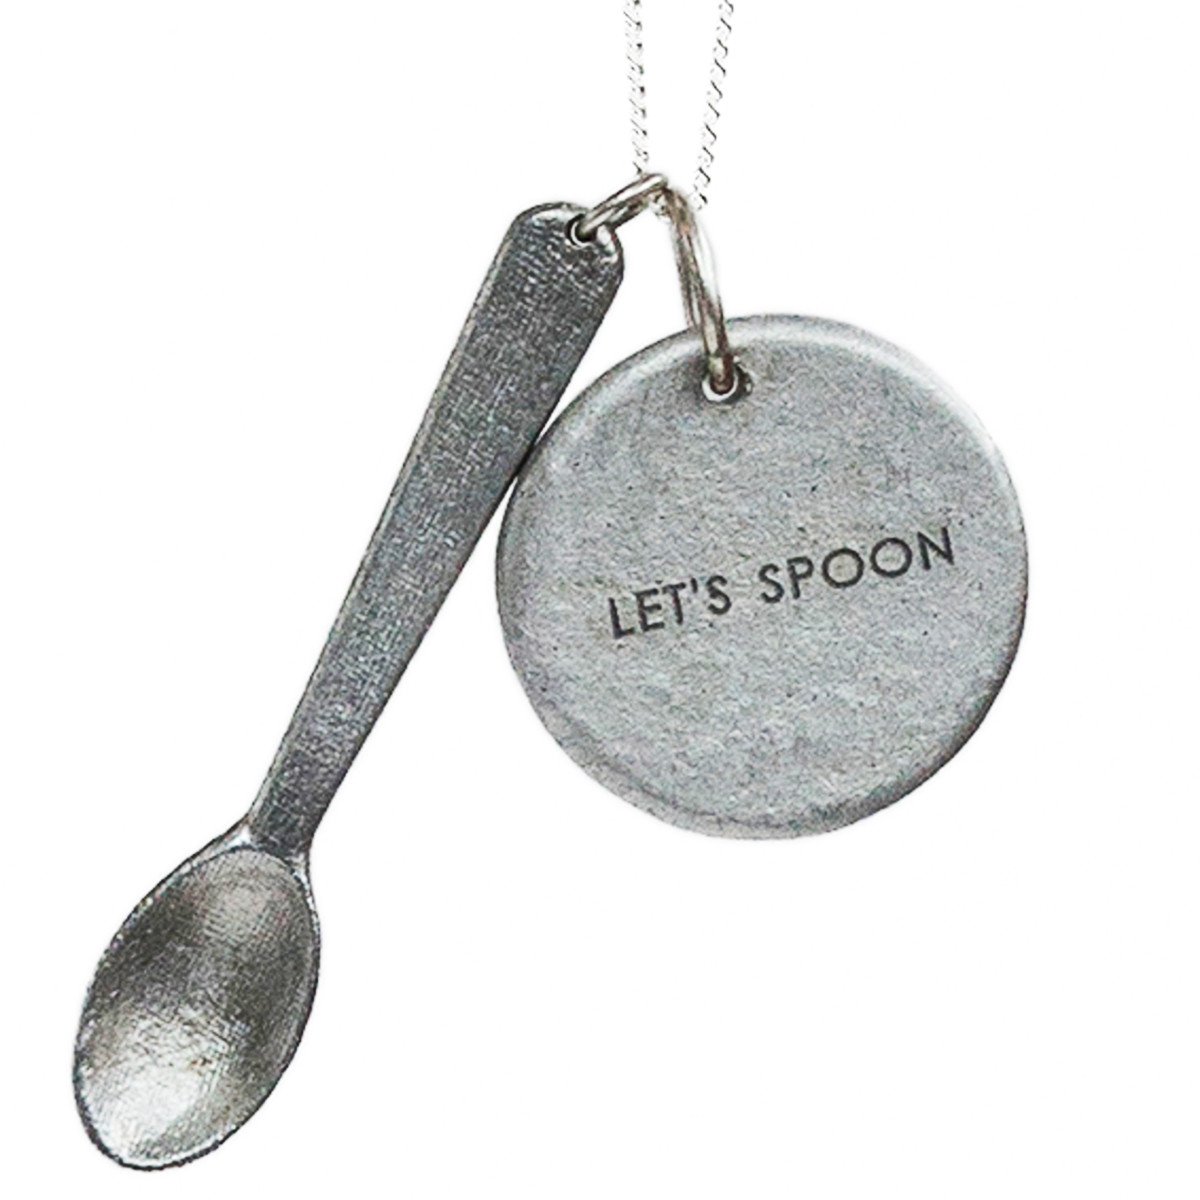 Let’s spoon jewelgram necklace. 